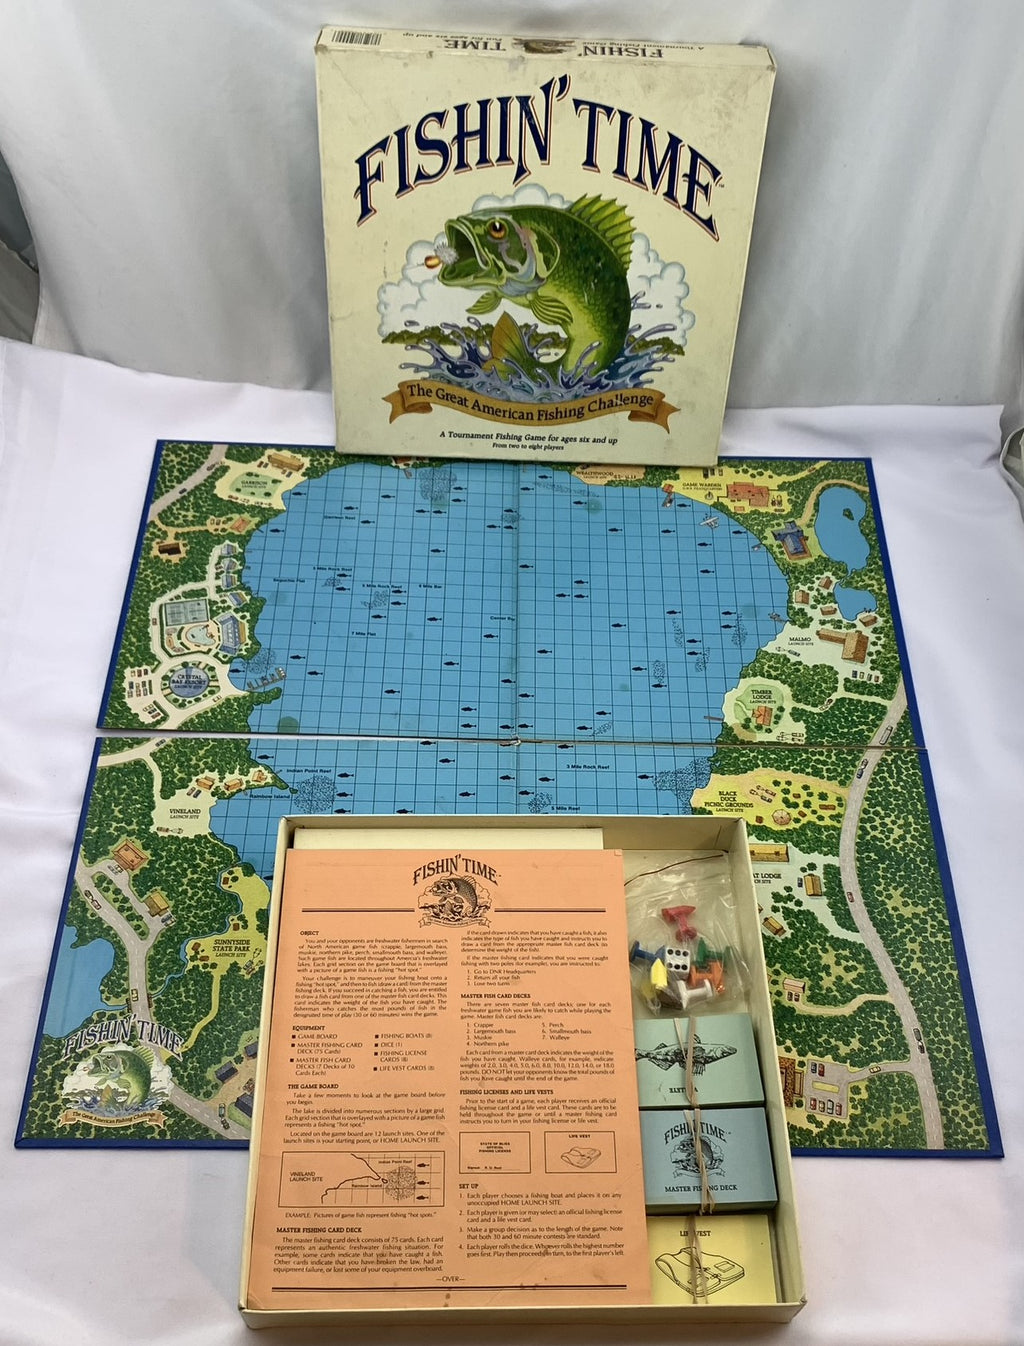 Fishin' Time Board Game / the Great American Fishing Challenge